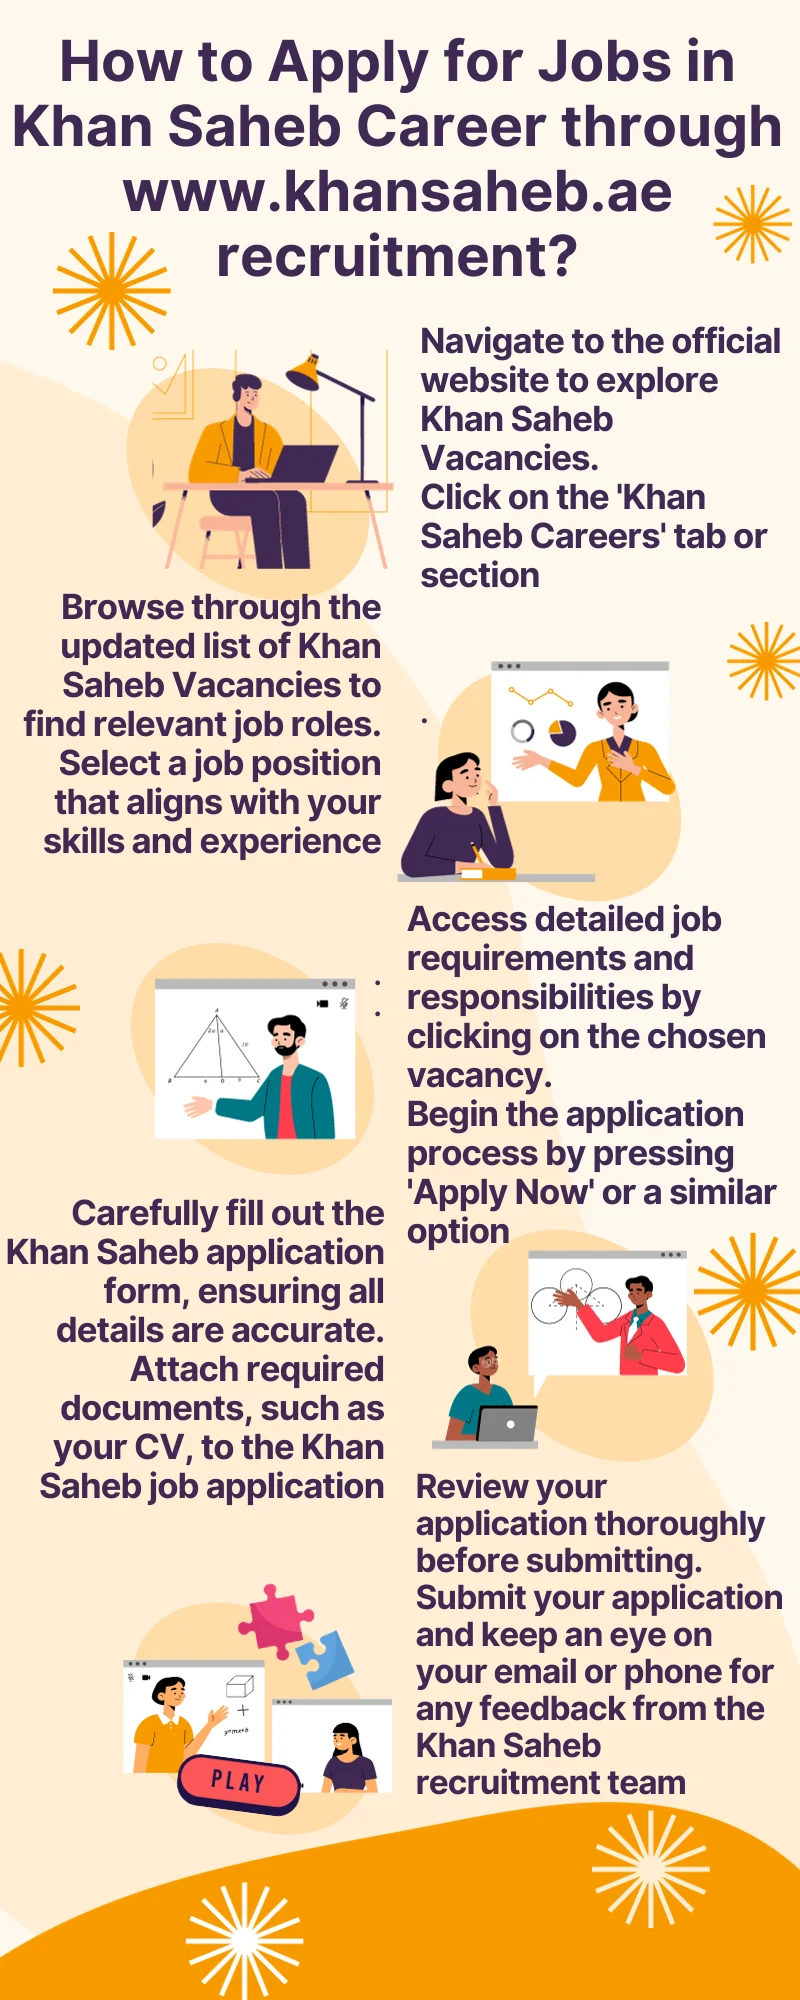 How to Apply for Jobs in Khan Saheb Career through www.khansaheb.ae recruitment?